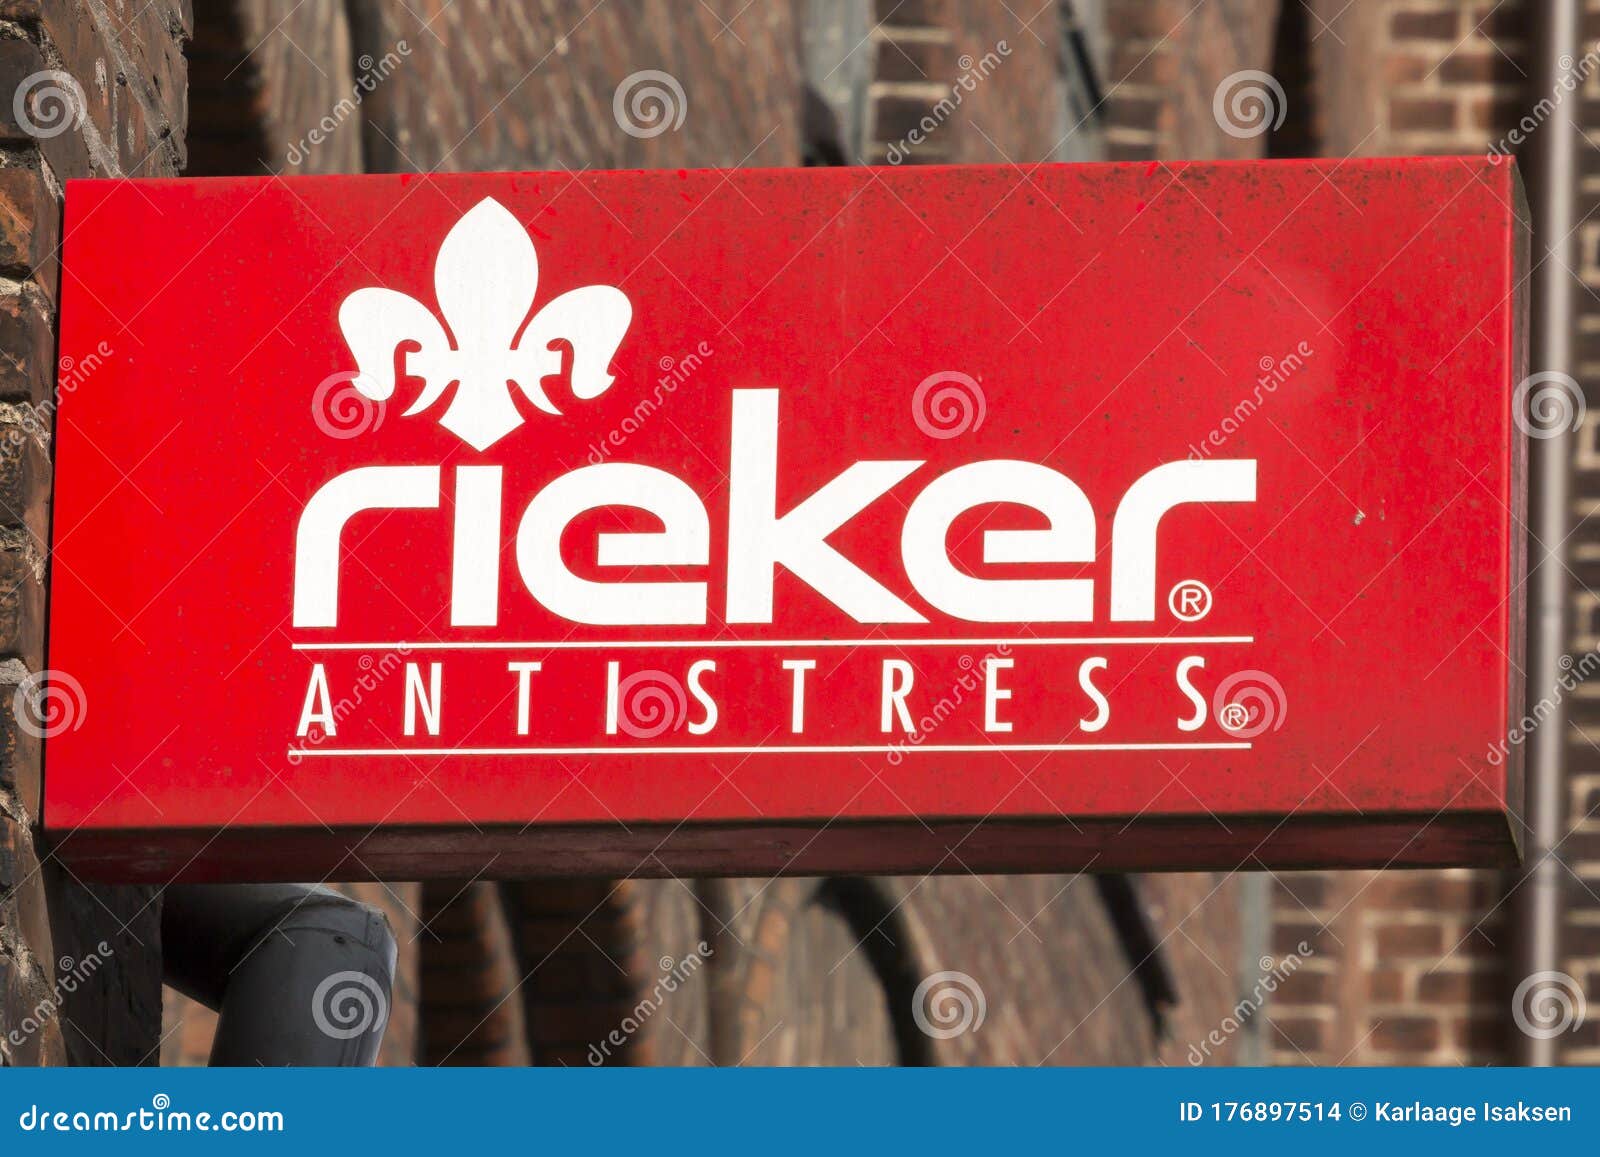 eksperimentel mudder tjeneren Rieker Store Photos - Free & Royalty-Free Stock Photos from Dreamstime